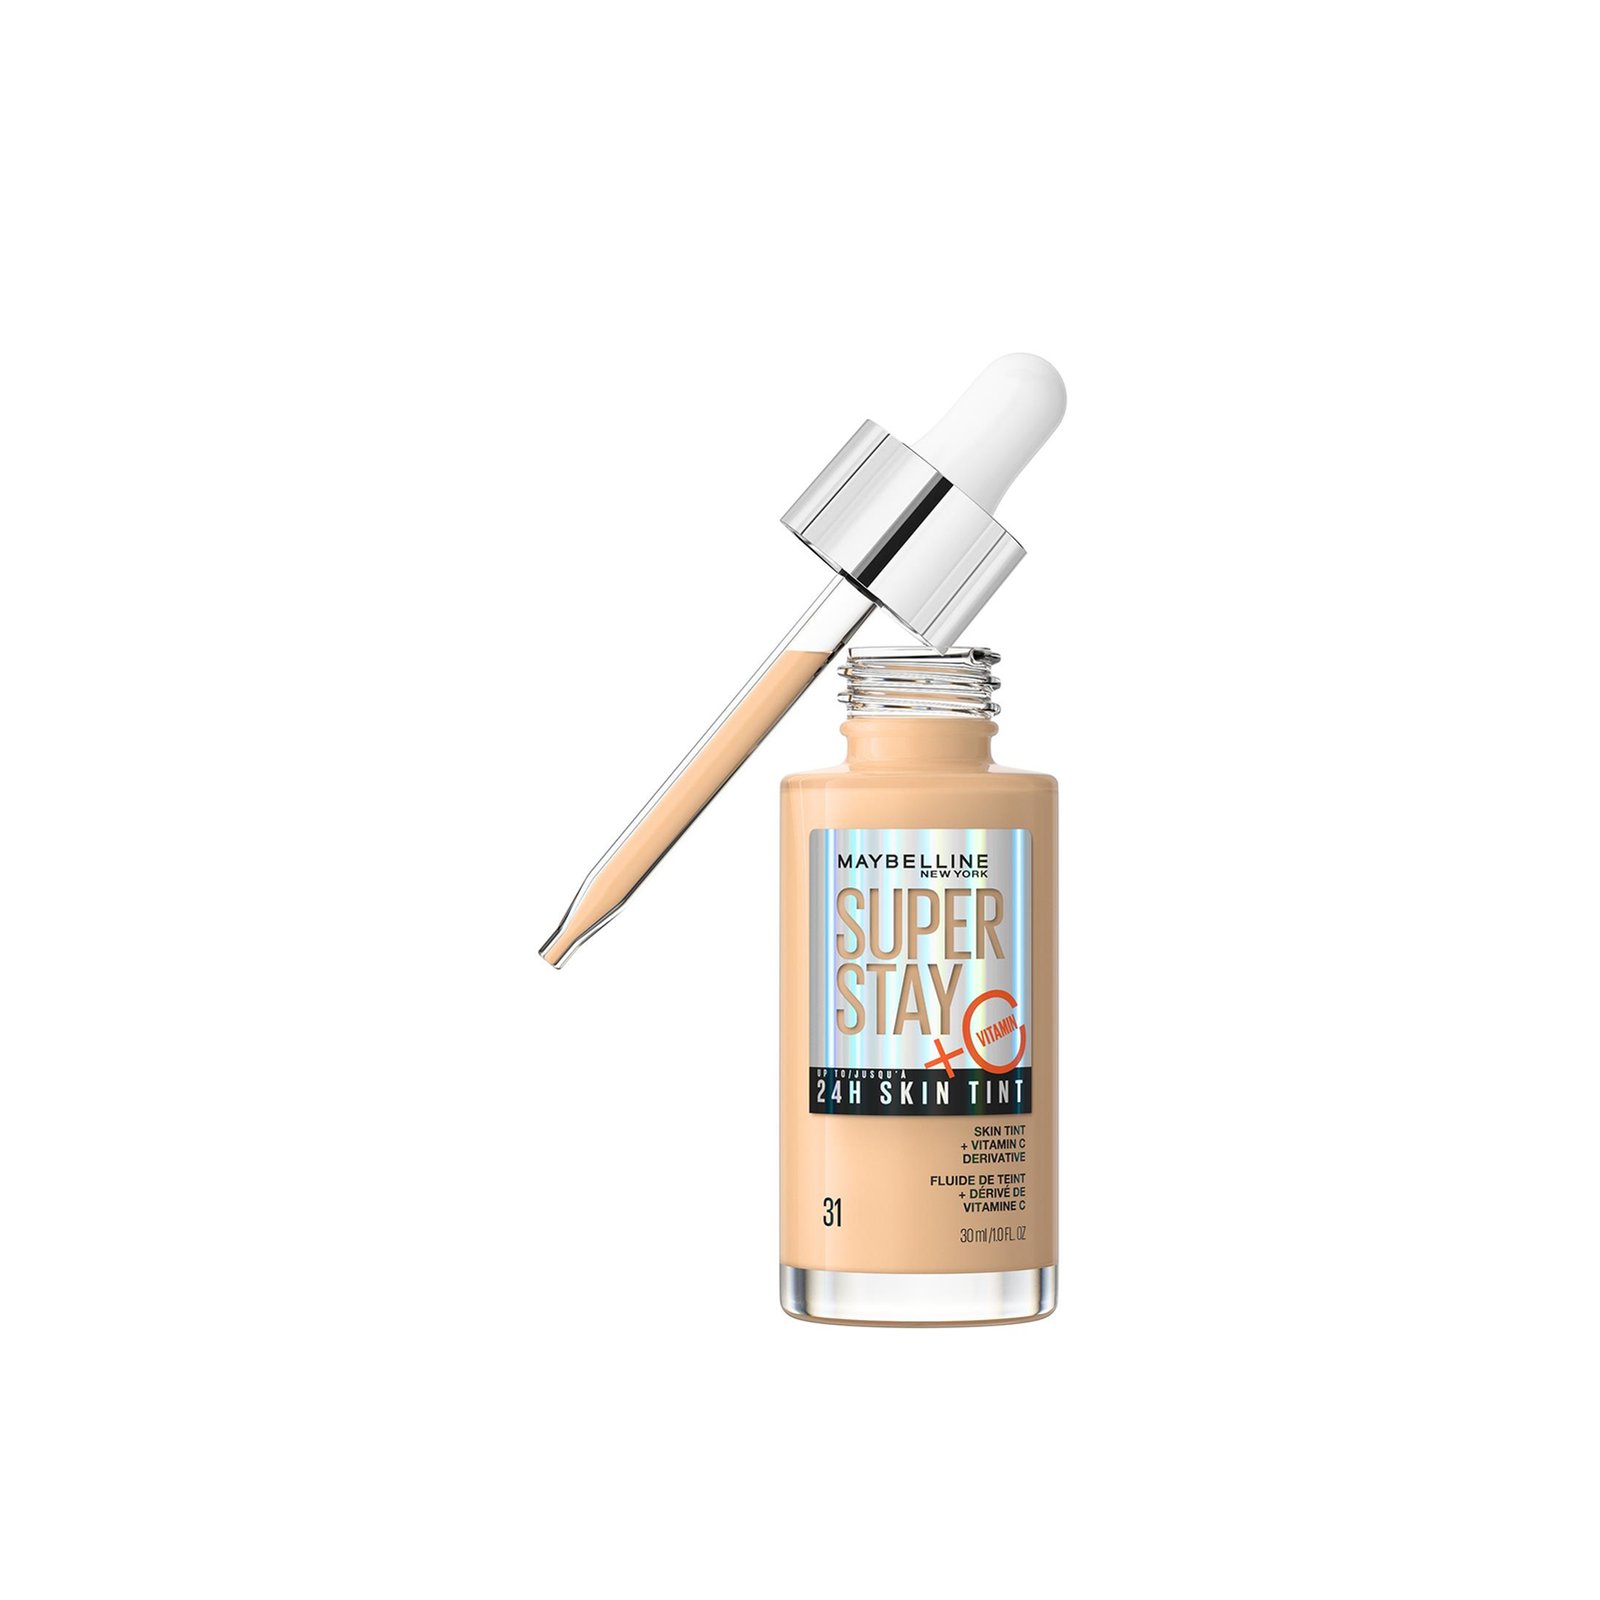 Maybelline Super Stay 24H Skin Tint Foundation 31 30ml (1.0 fl oz)